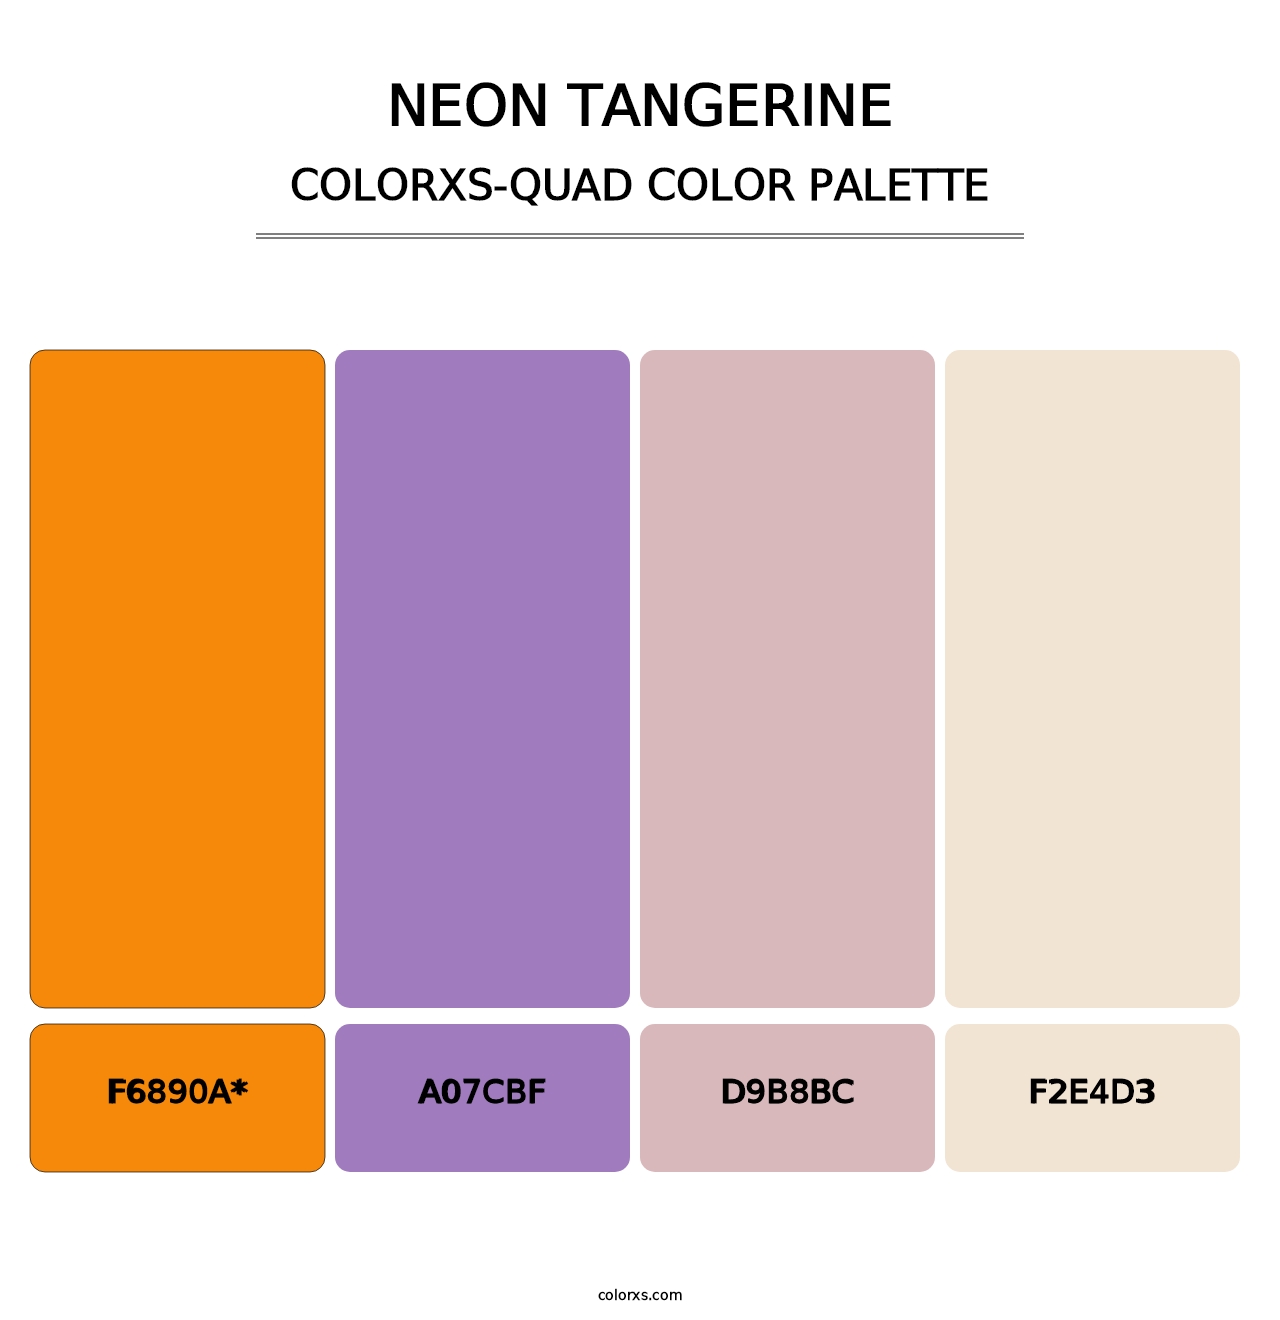 Neon Tangerine - Colorxs Quad Palette